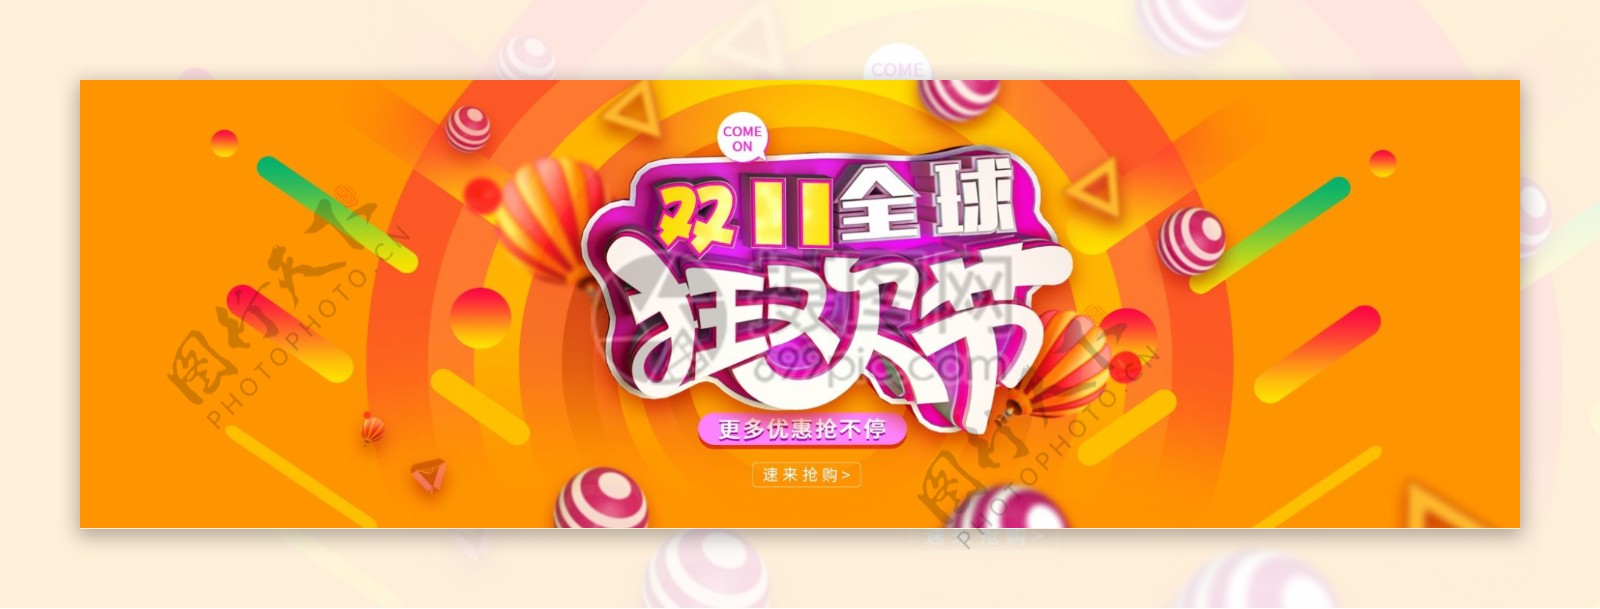 双11狂欢节淘宝banner